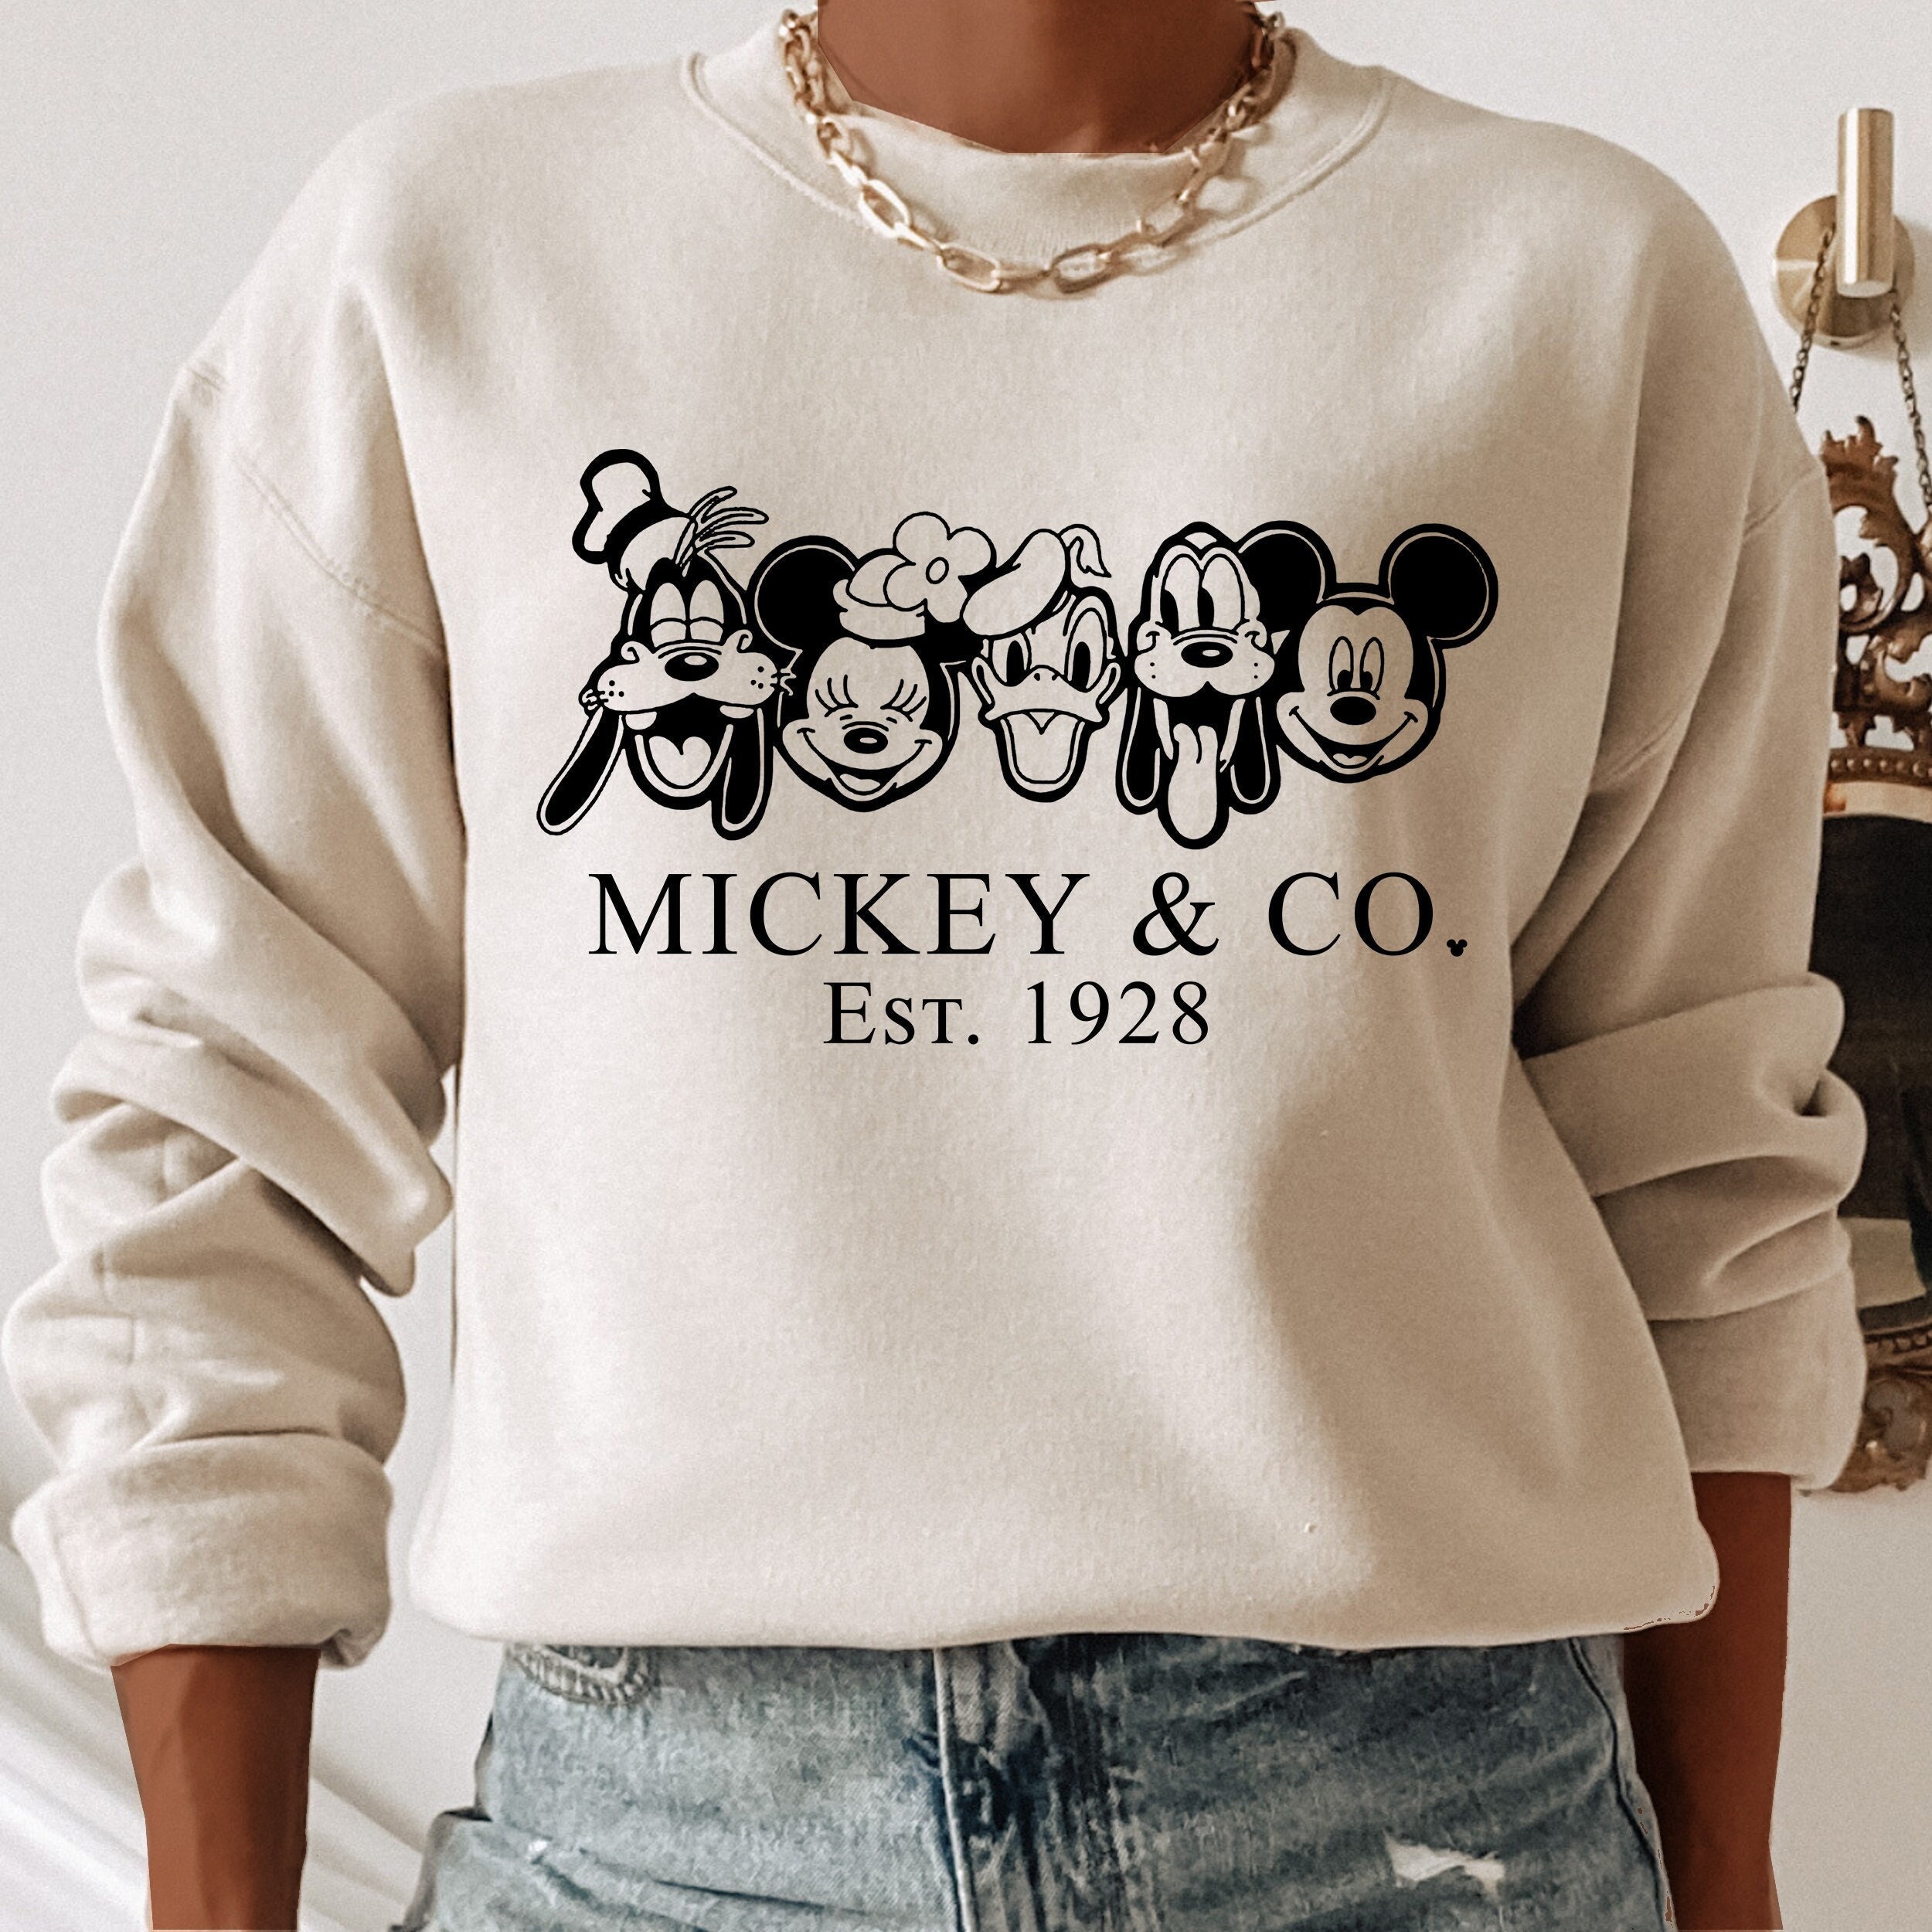 Mickey & Co Pullover, Unisex Pullover, Disney Pullover, Oversized Pullover, Disney  Pullover, Mickey Sweater, Oversized Pullover 